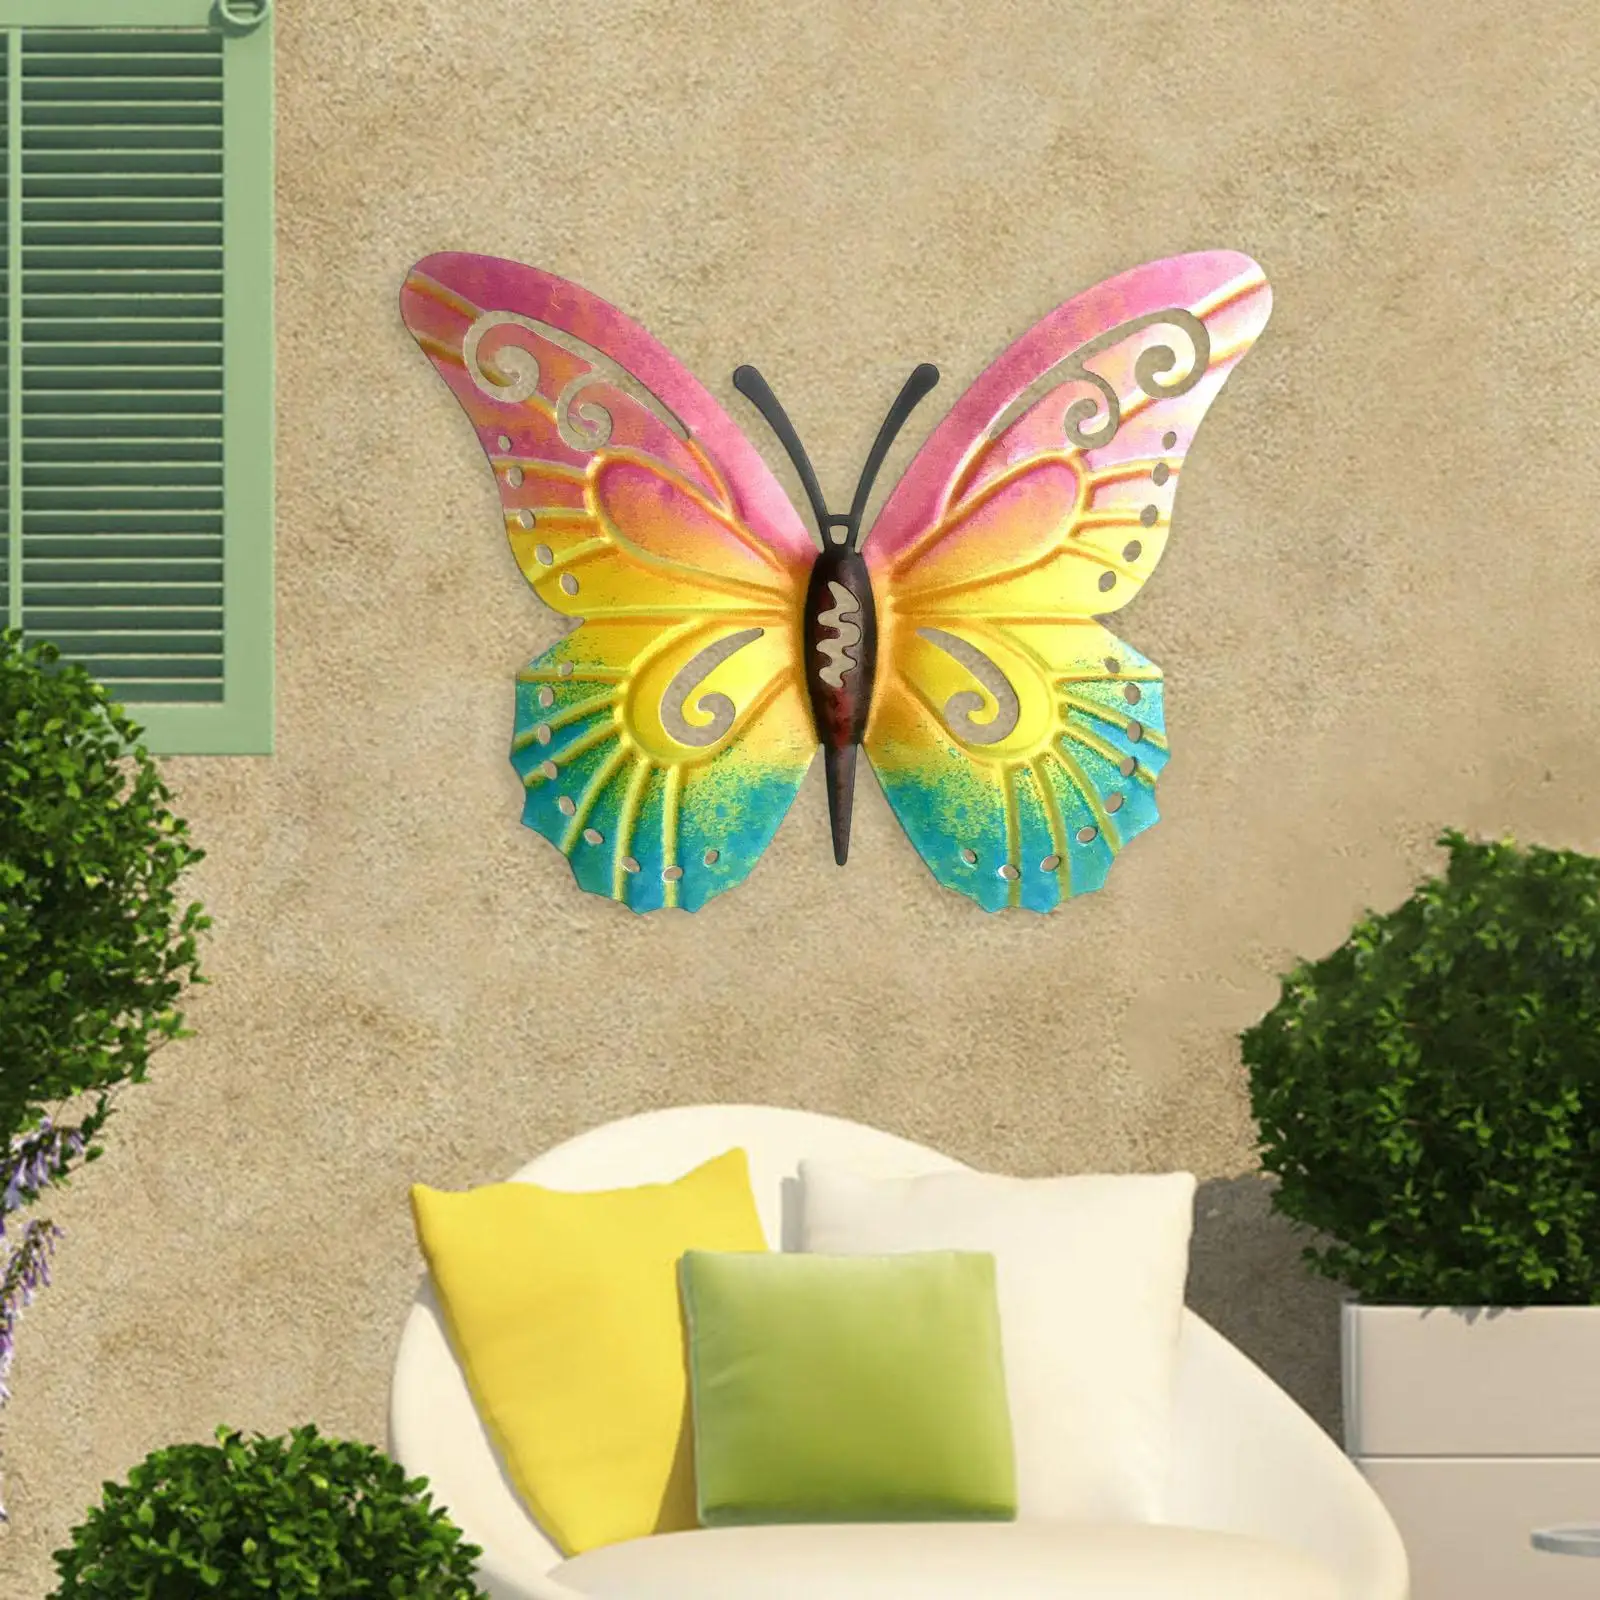 Butterfly Wall Decors Wall Sculptures for Front Door Fence Outdoor Indoor